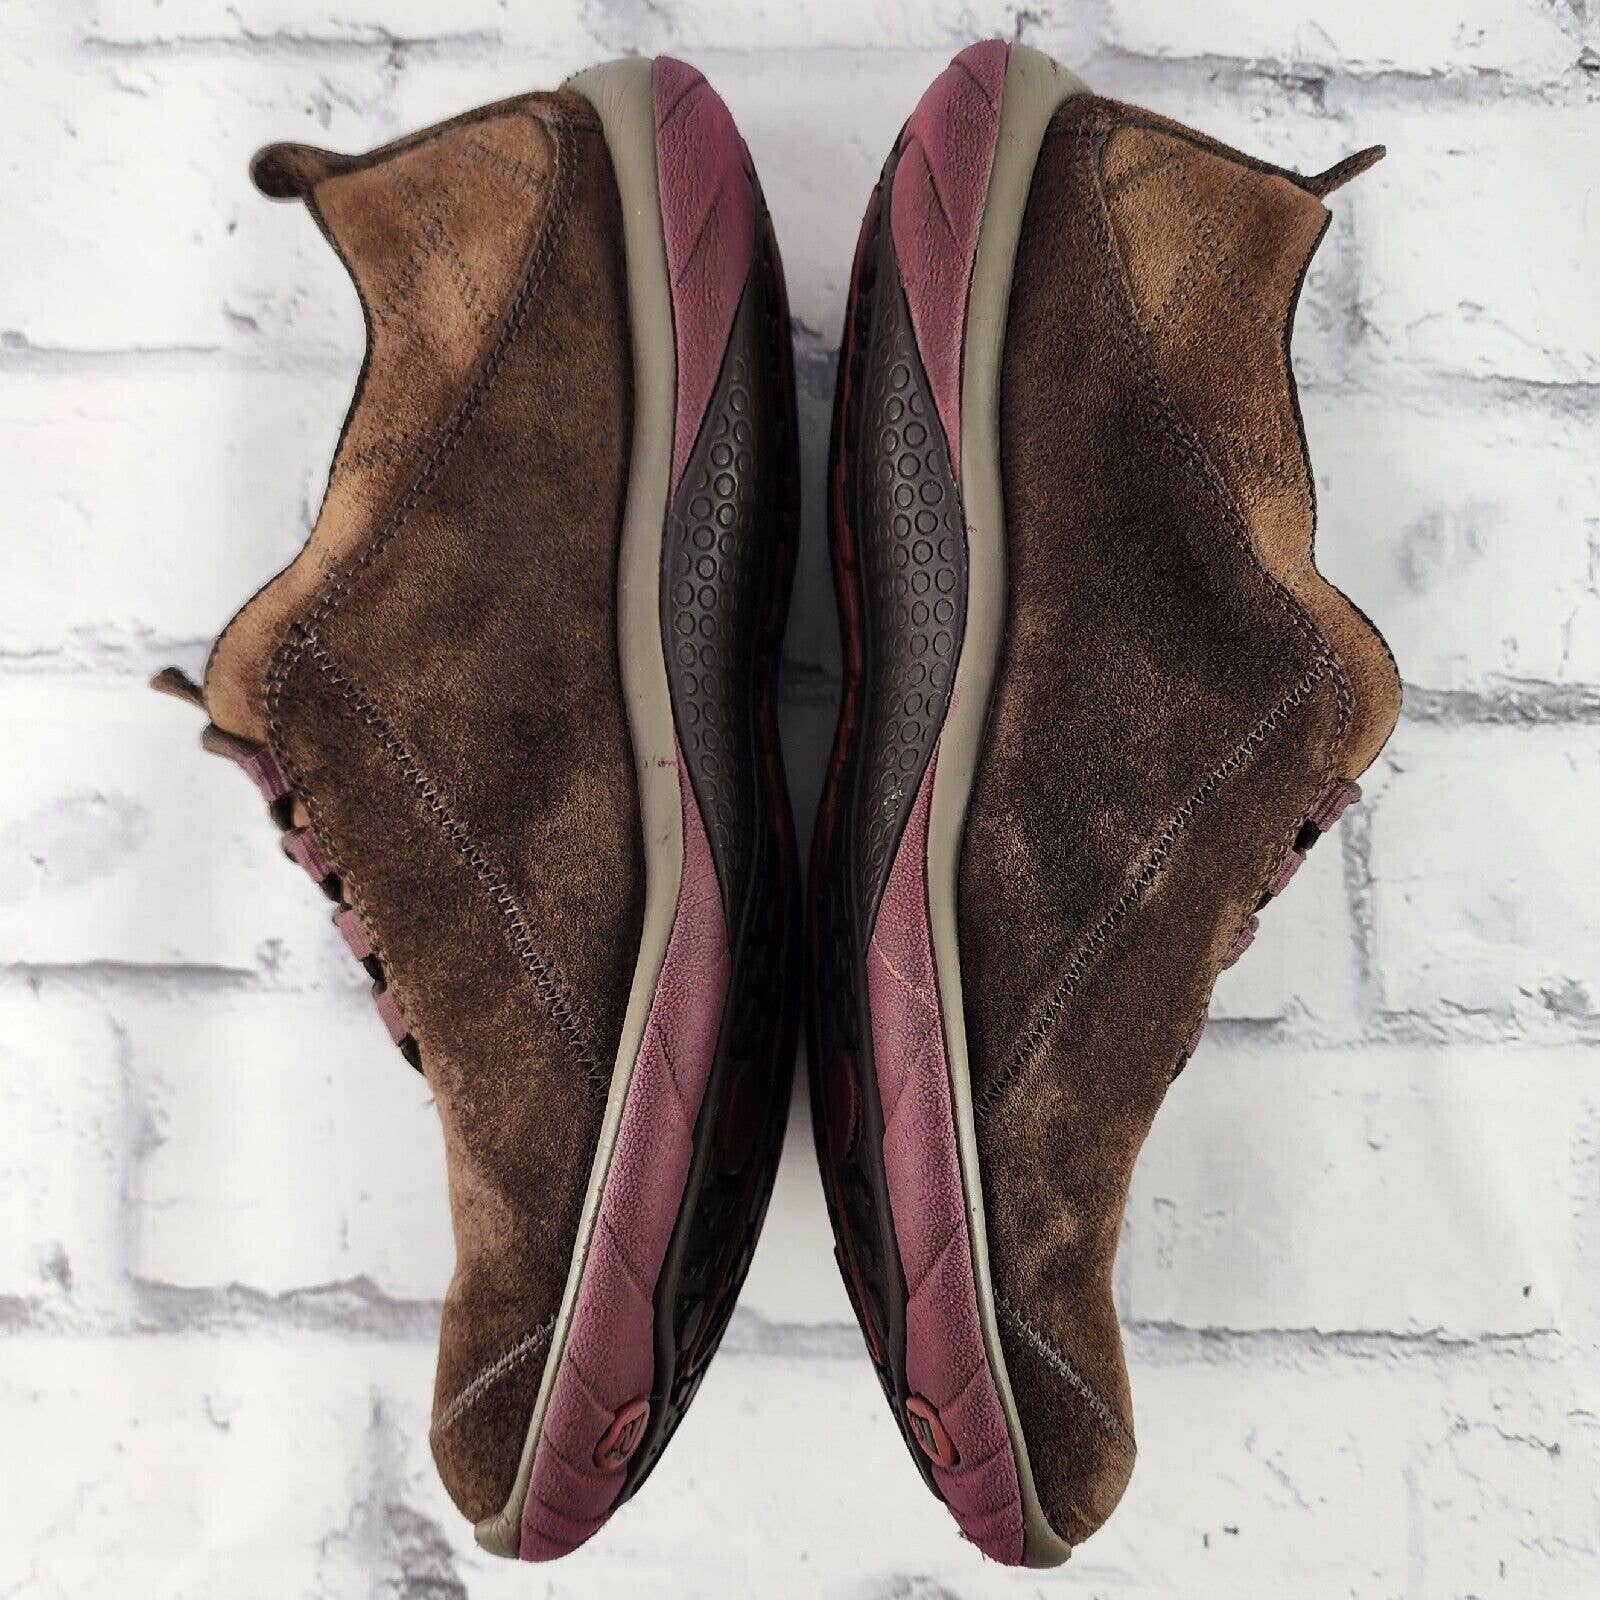 Merrell Ellipse Flats Women's 7.5 M Coffee Bean Brown Leather Comfort Sneakers